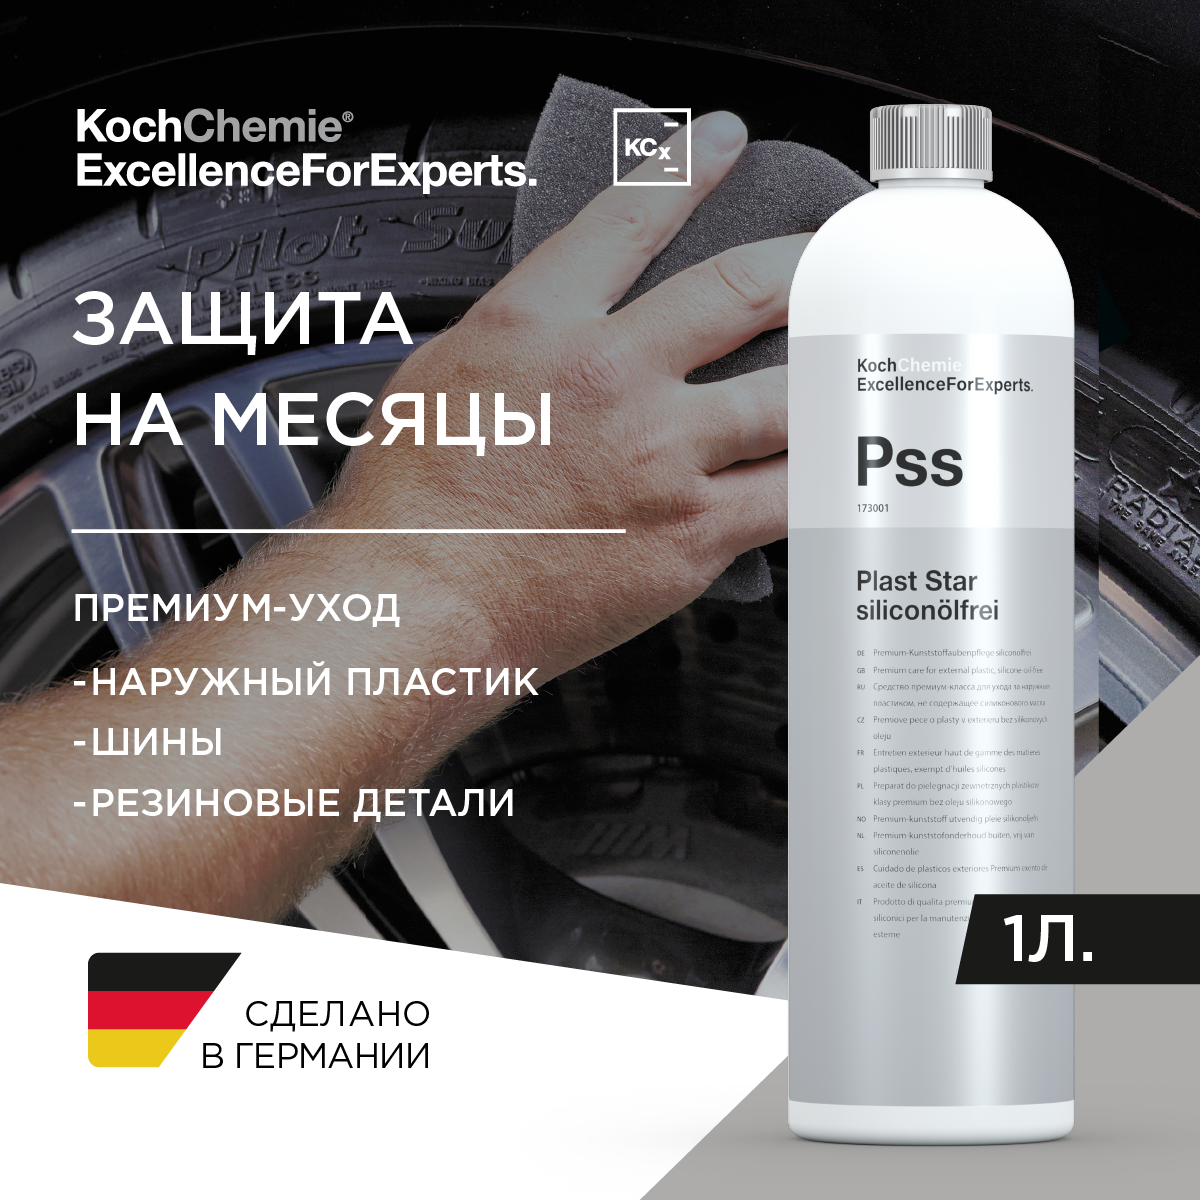 ExcellenceForExperts | Koch Chemie PLAST STAR SILICONOLFREI - Круглогодичное средство по уходу за наружным пластиком и шинами авто. (1л)